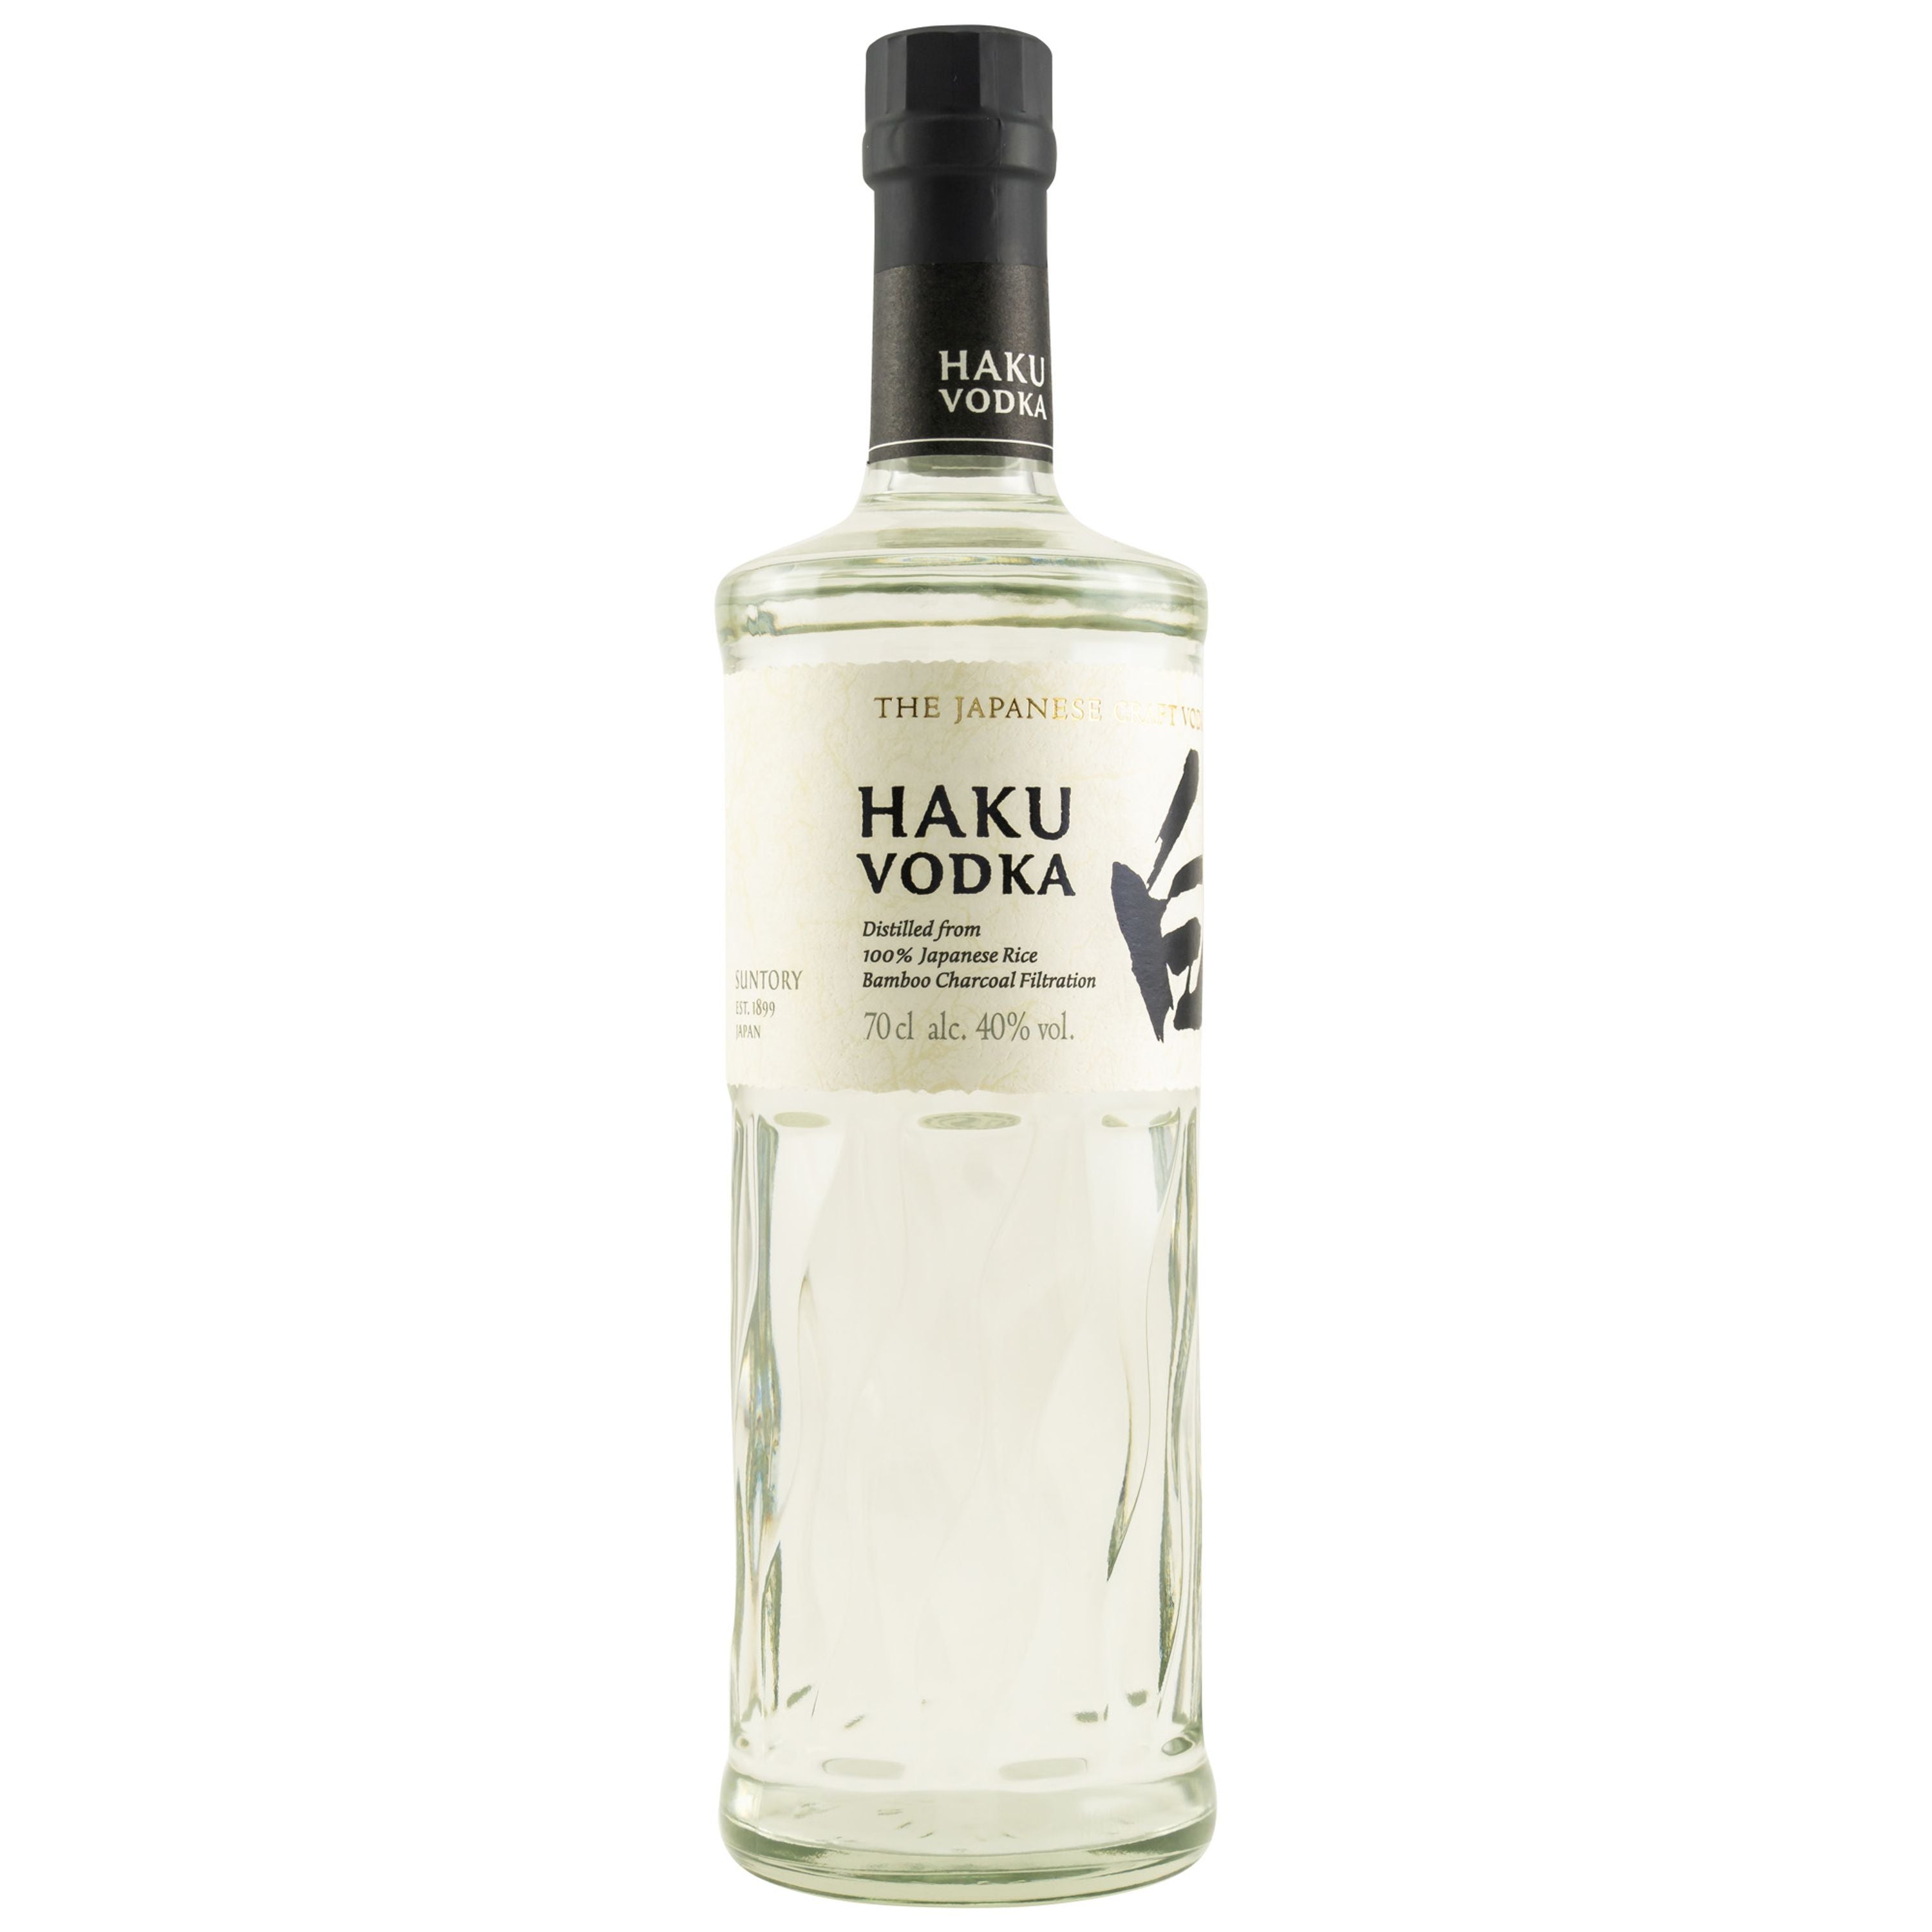 Haku Vodka 0.7l, alc. 40% by volume, vodka Japan 